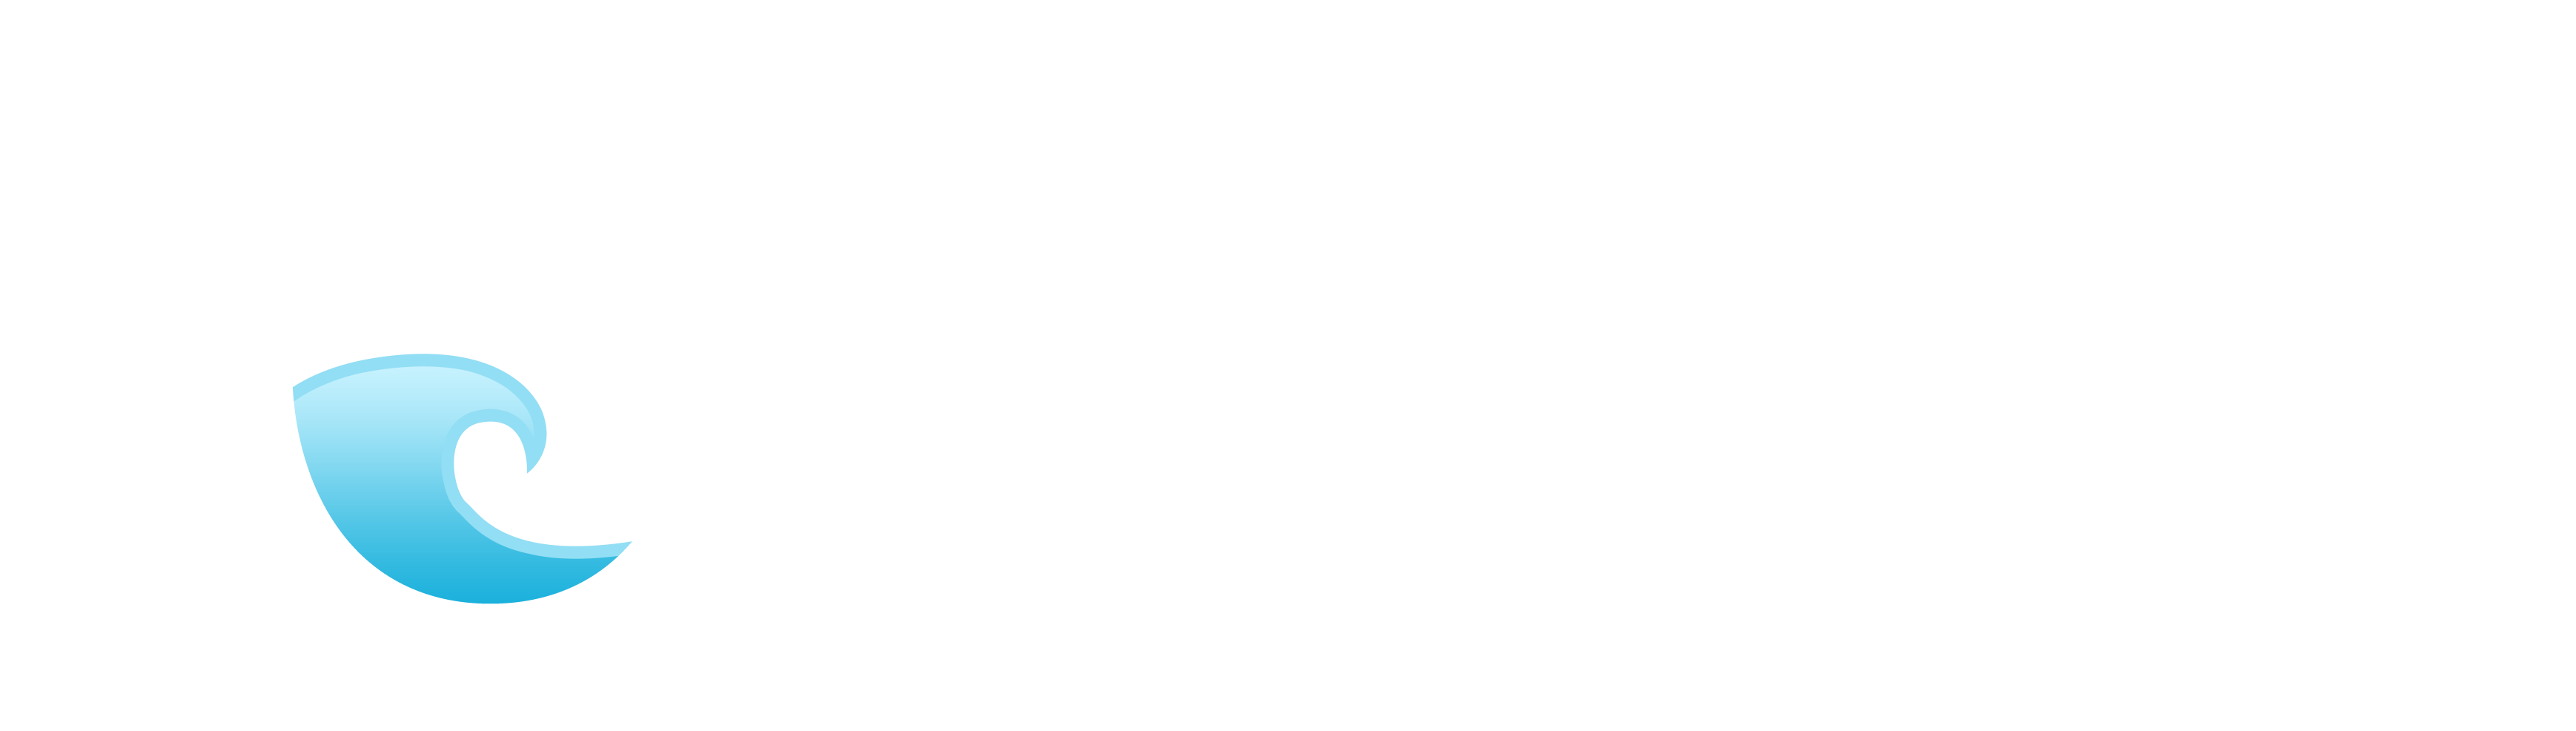 dotOcean logo